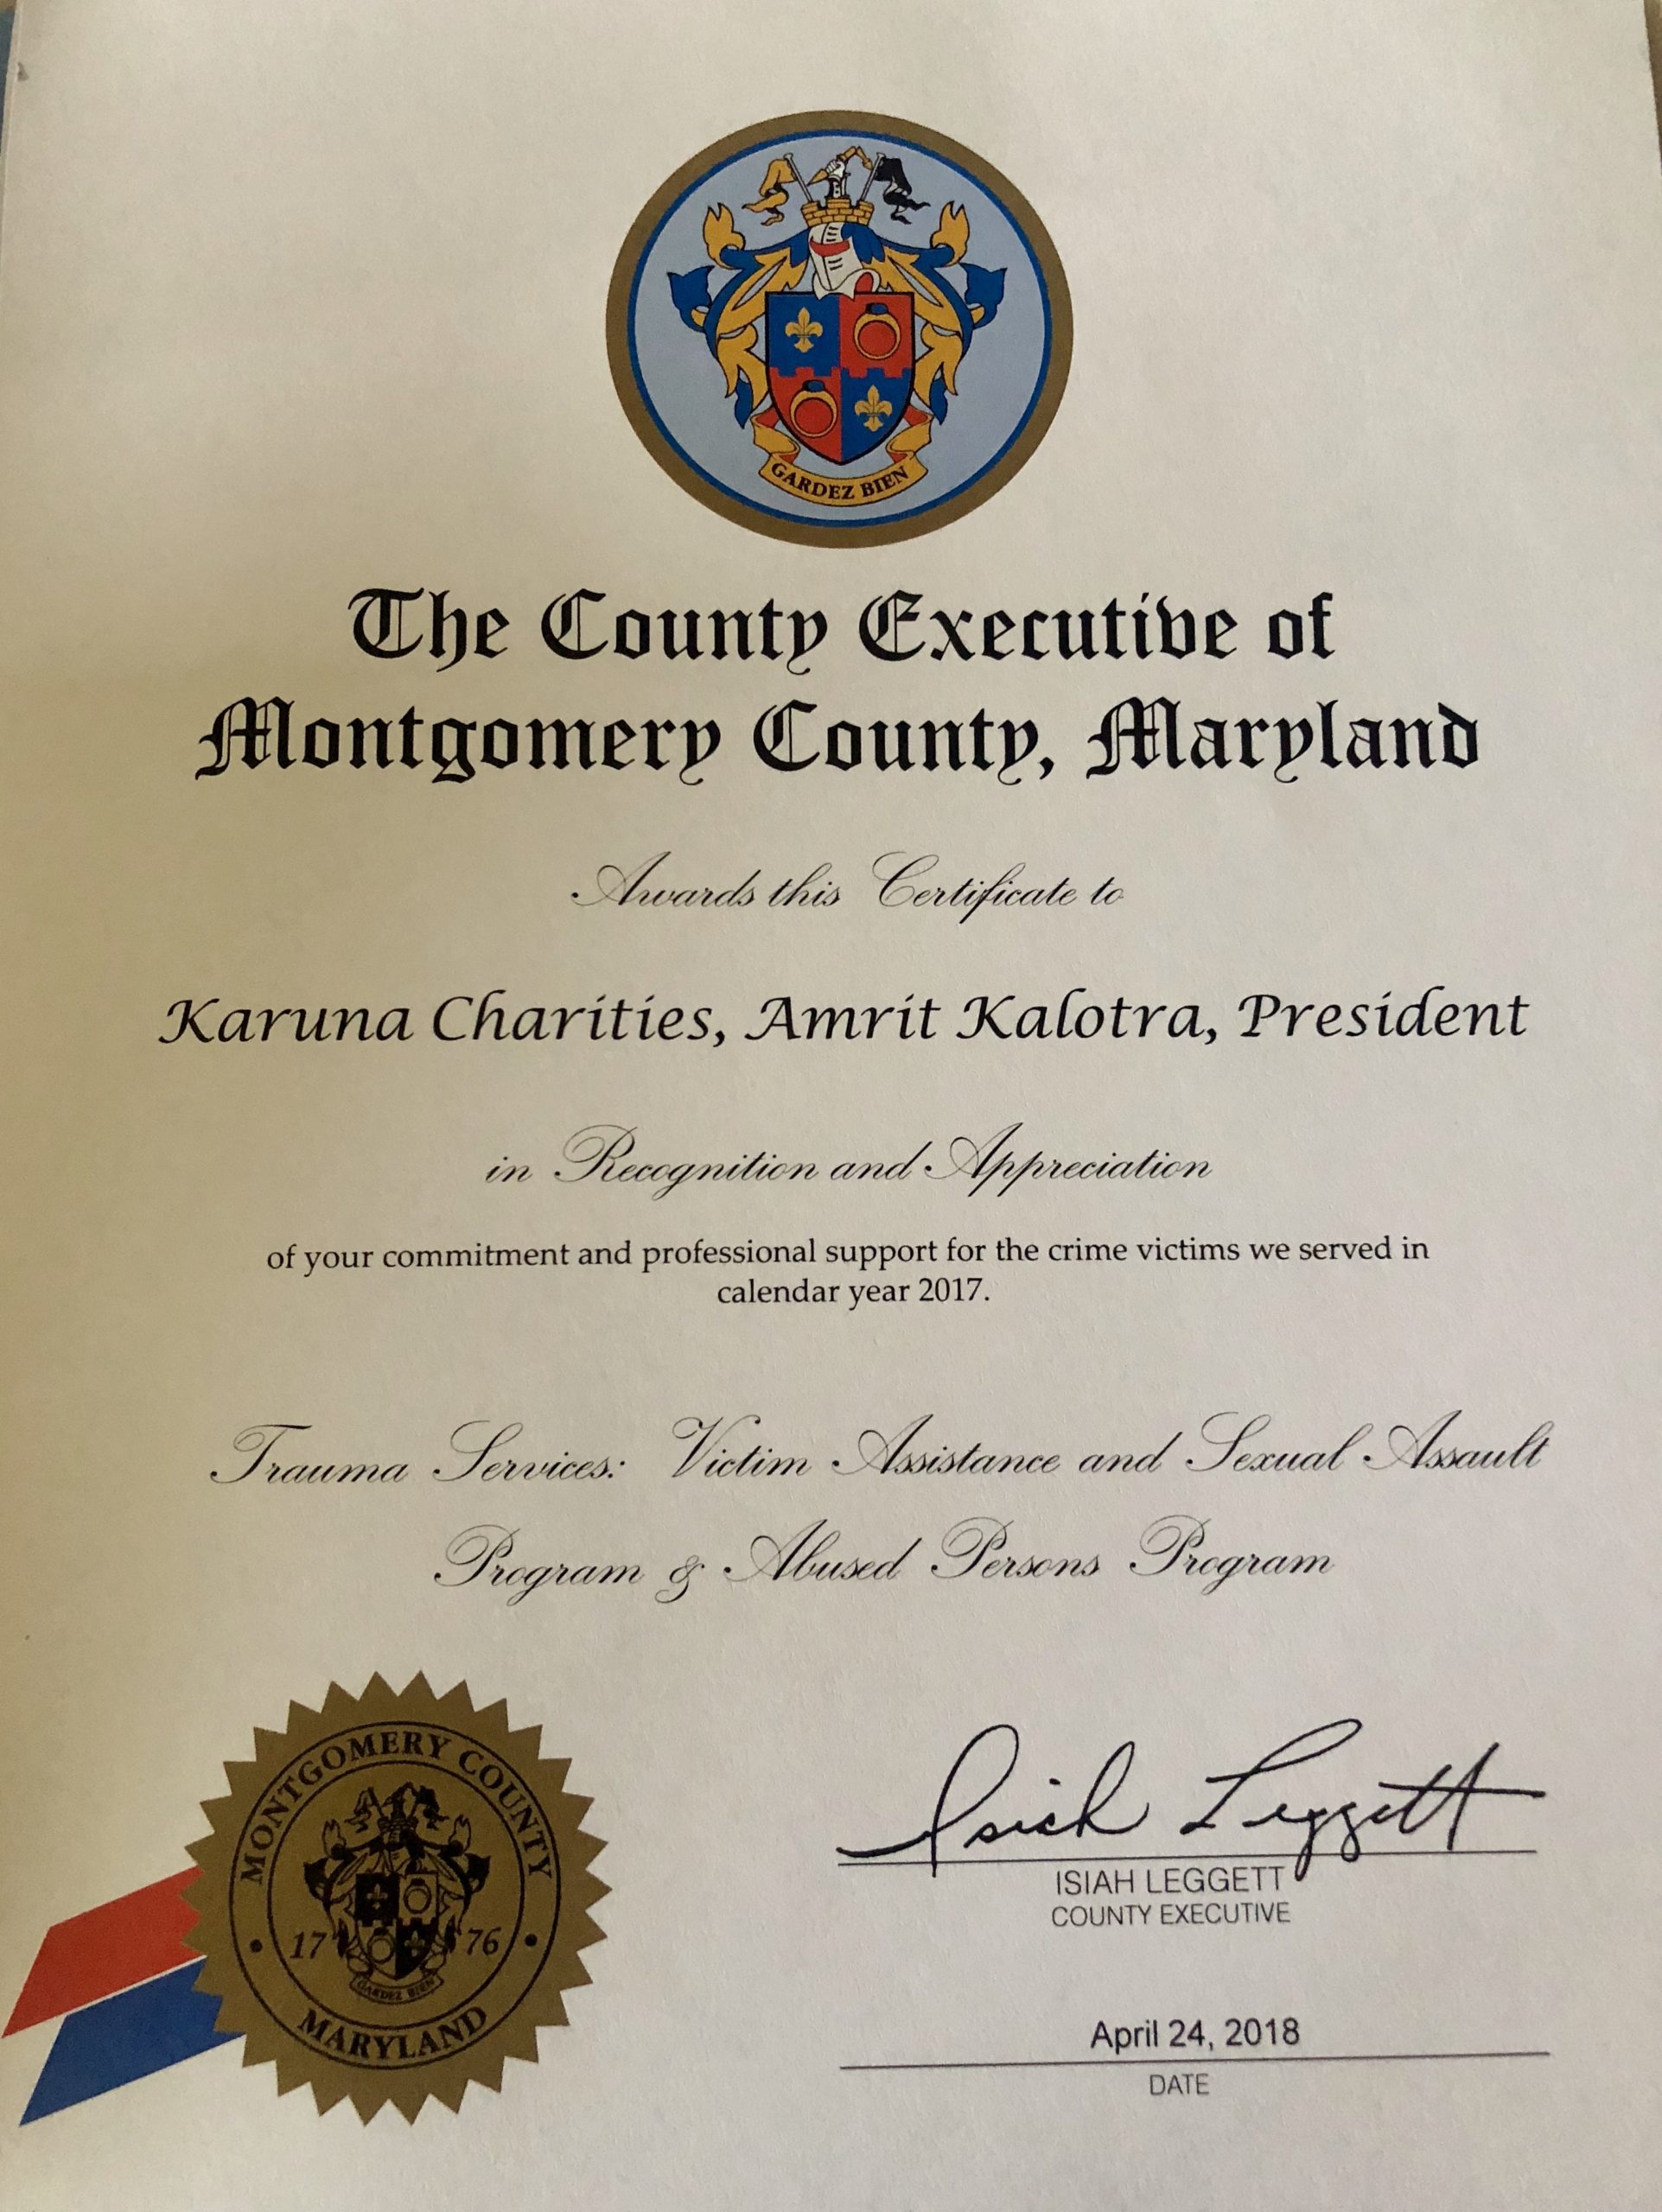 2019: Awarded Certificate